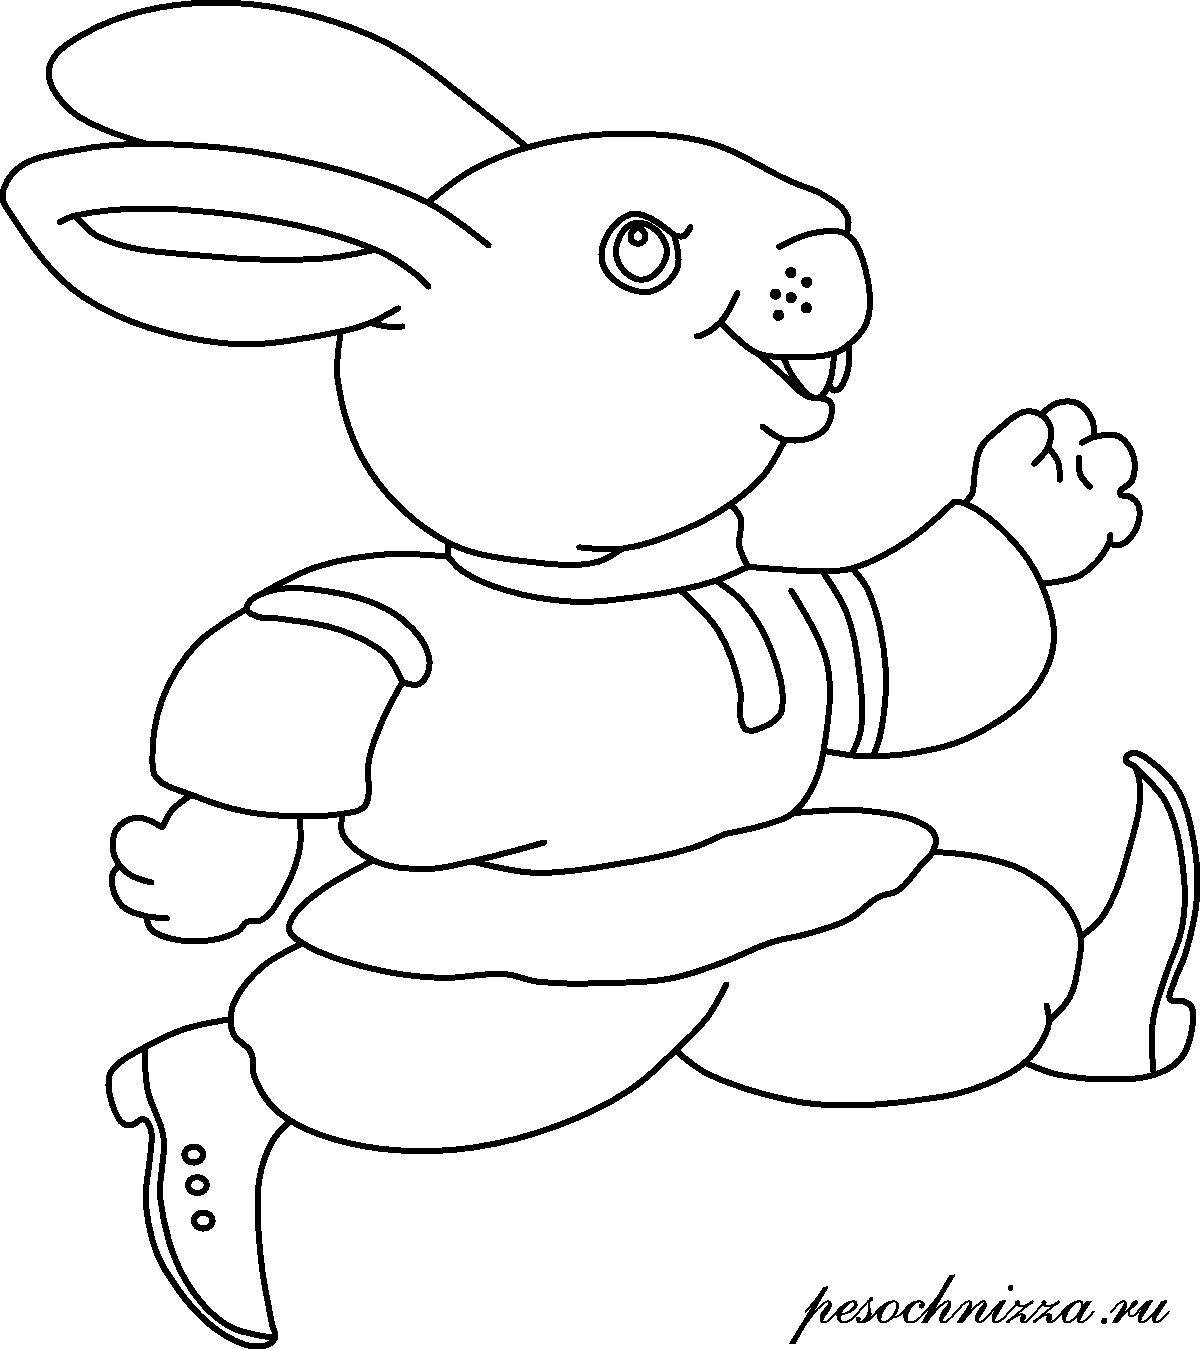 Изысканная раскраска зайца для детей 3-4 лет